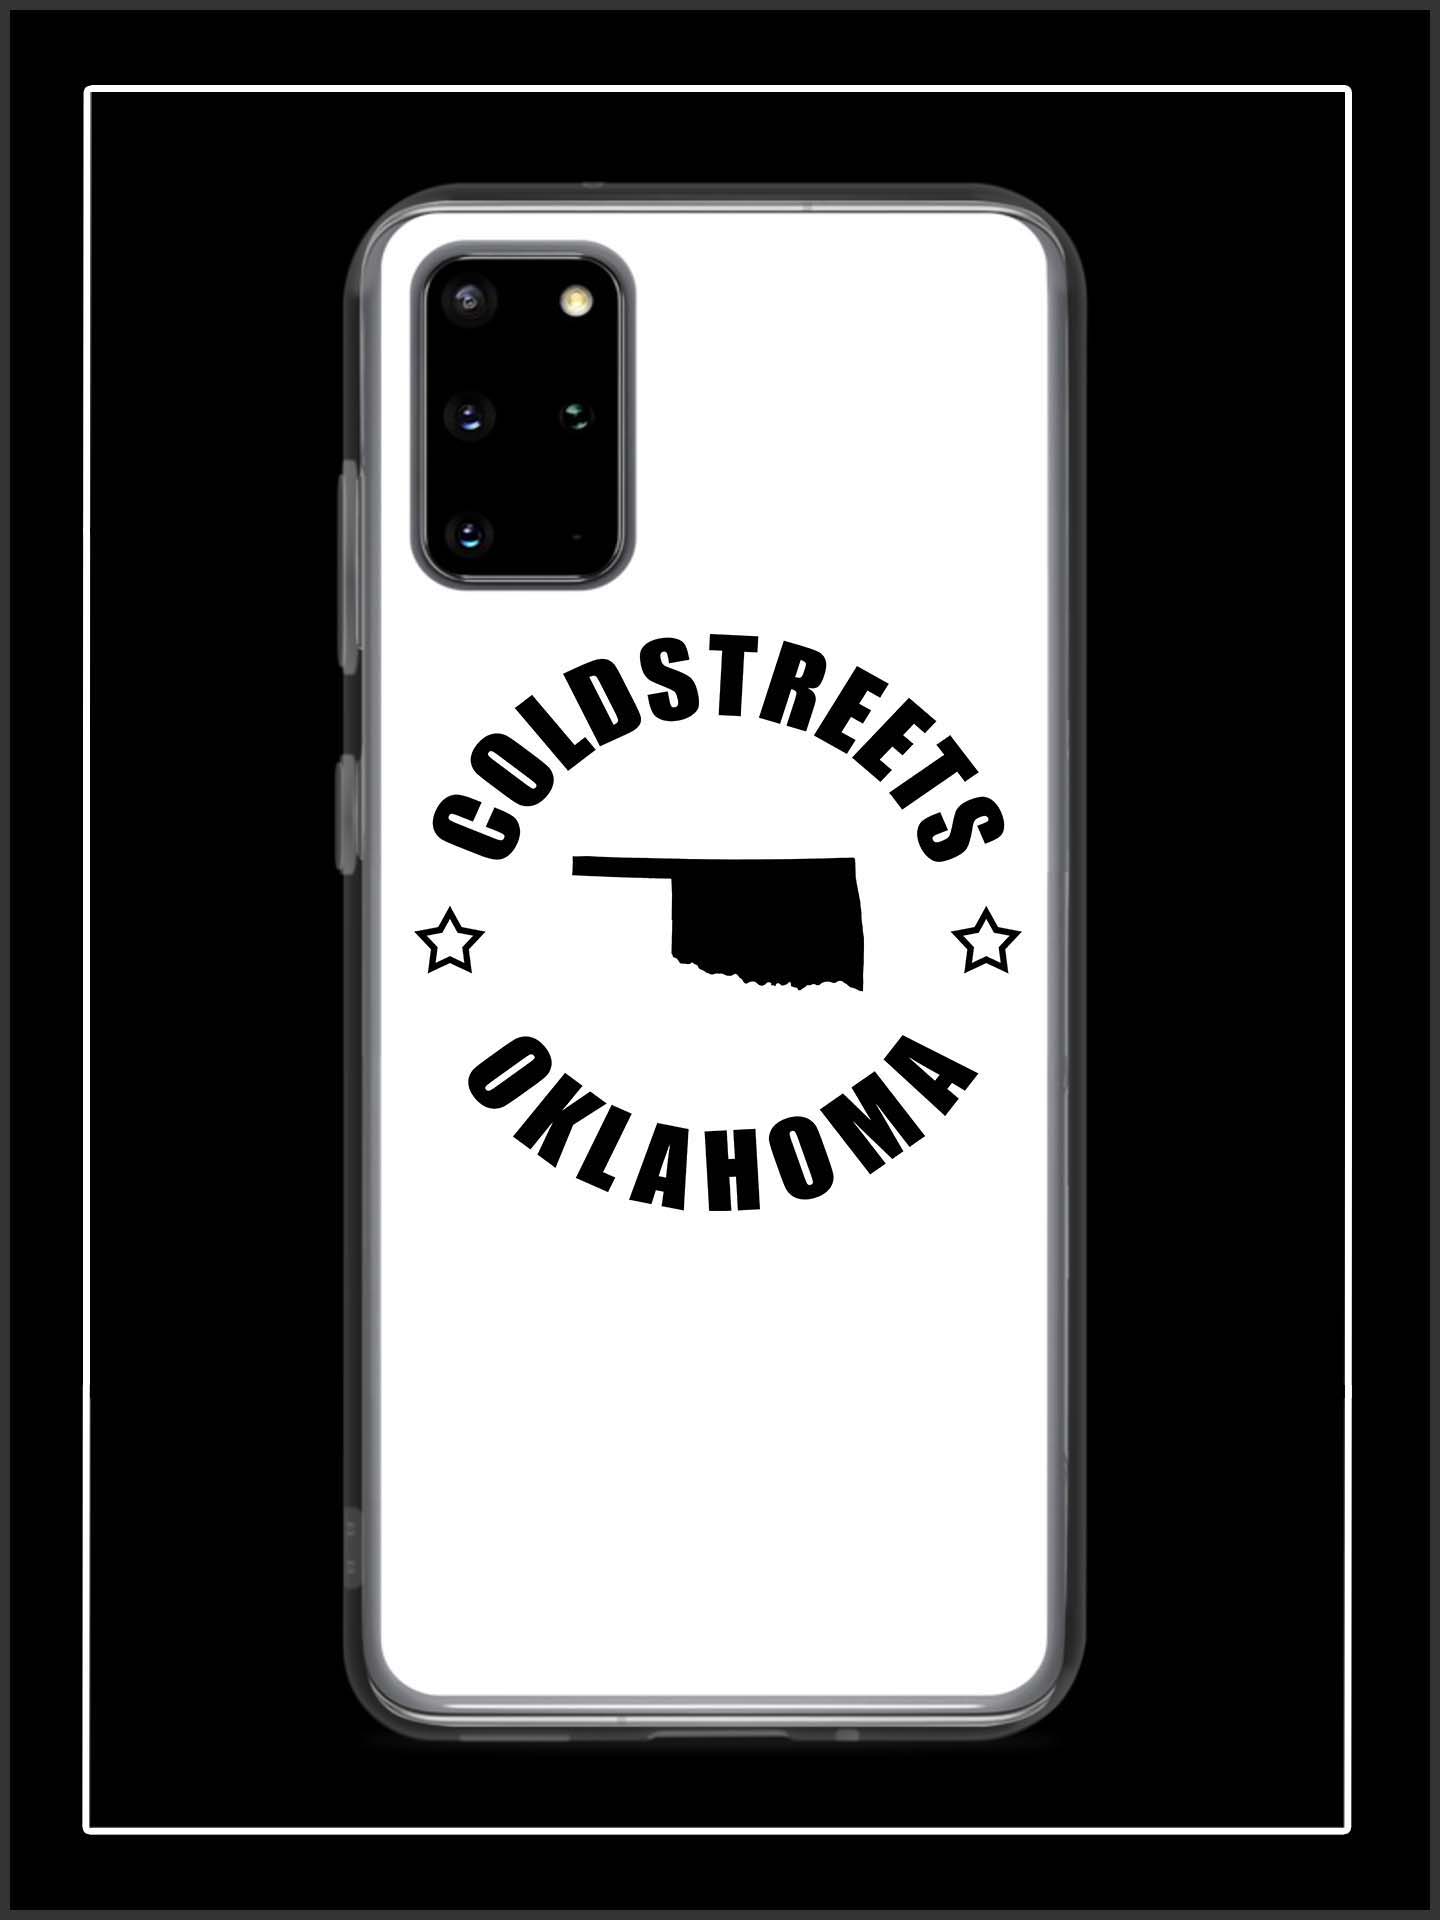 Cold Streets Oklahoma Samsung Cases